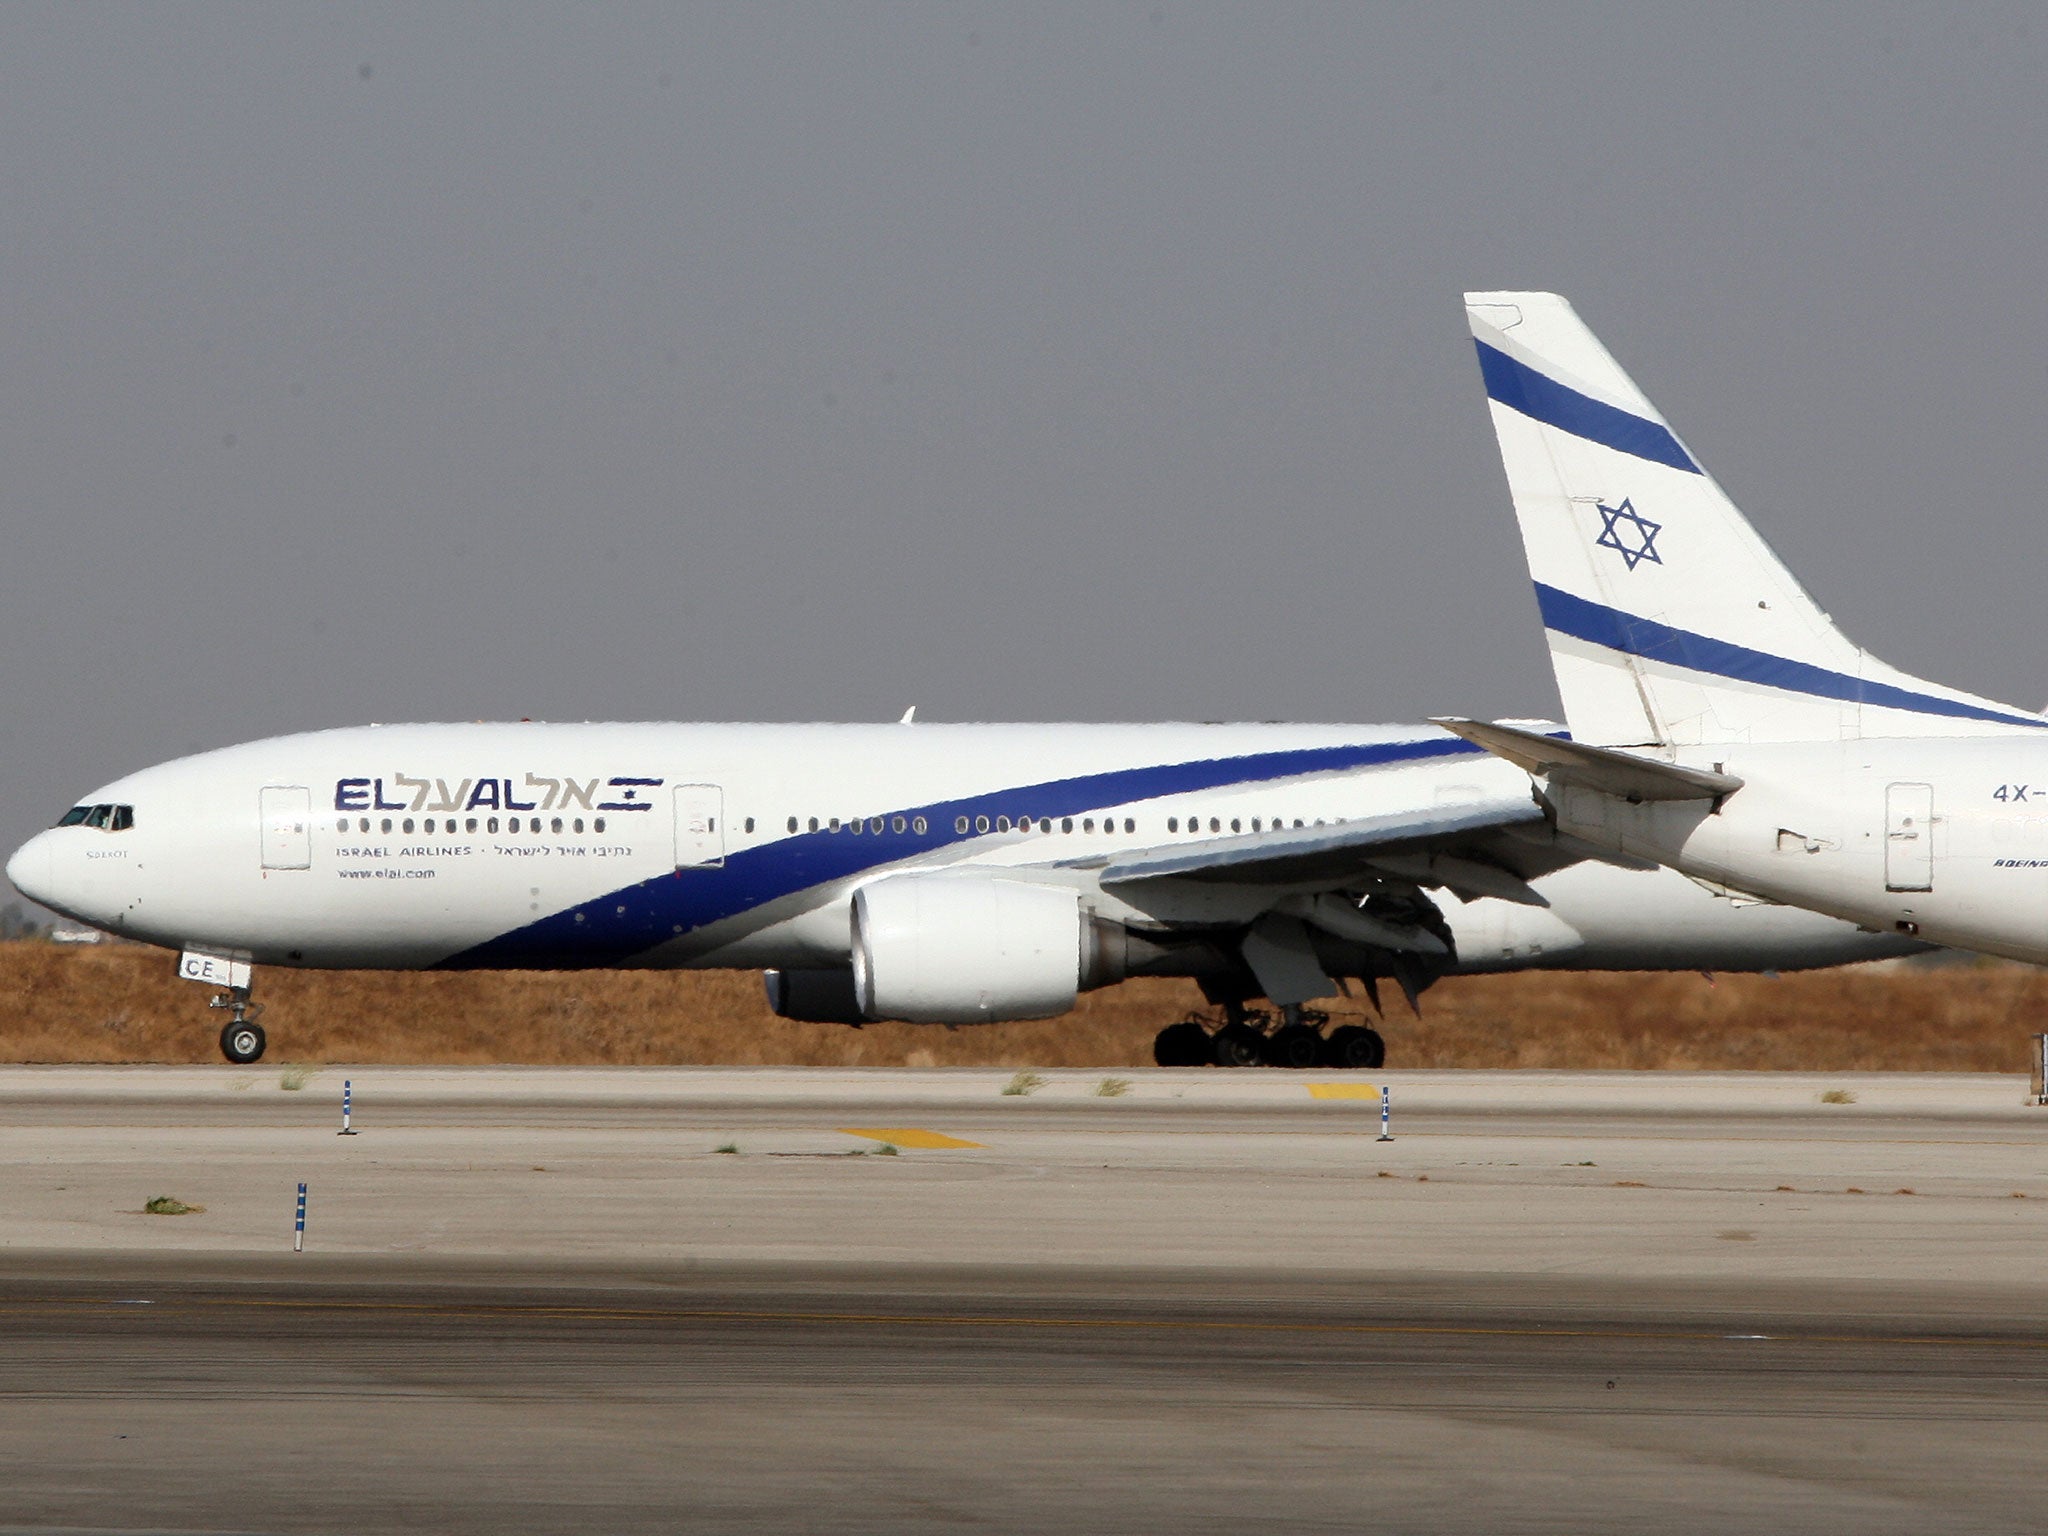 El Al planes on the tarmac at Ben Gurion International airport on October 28, 2009